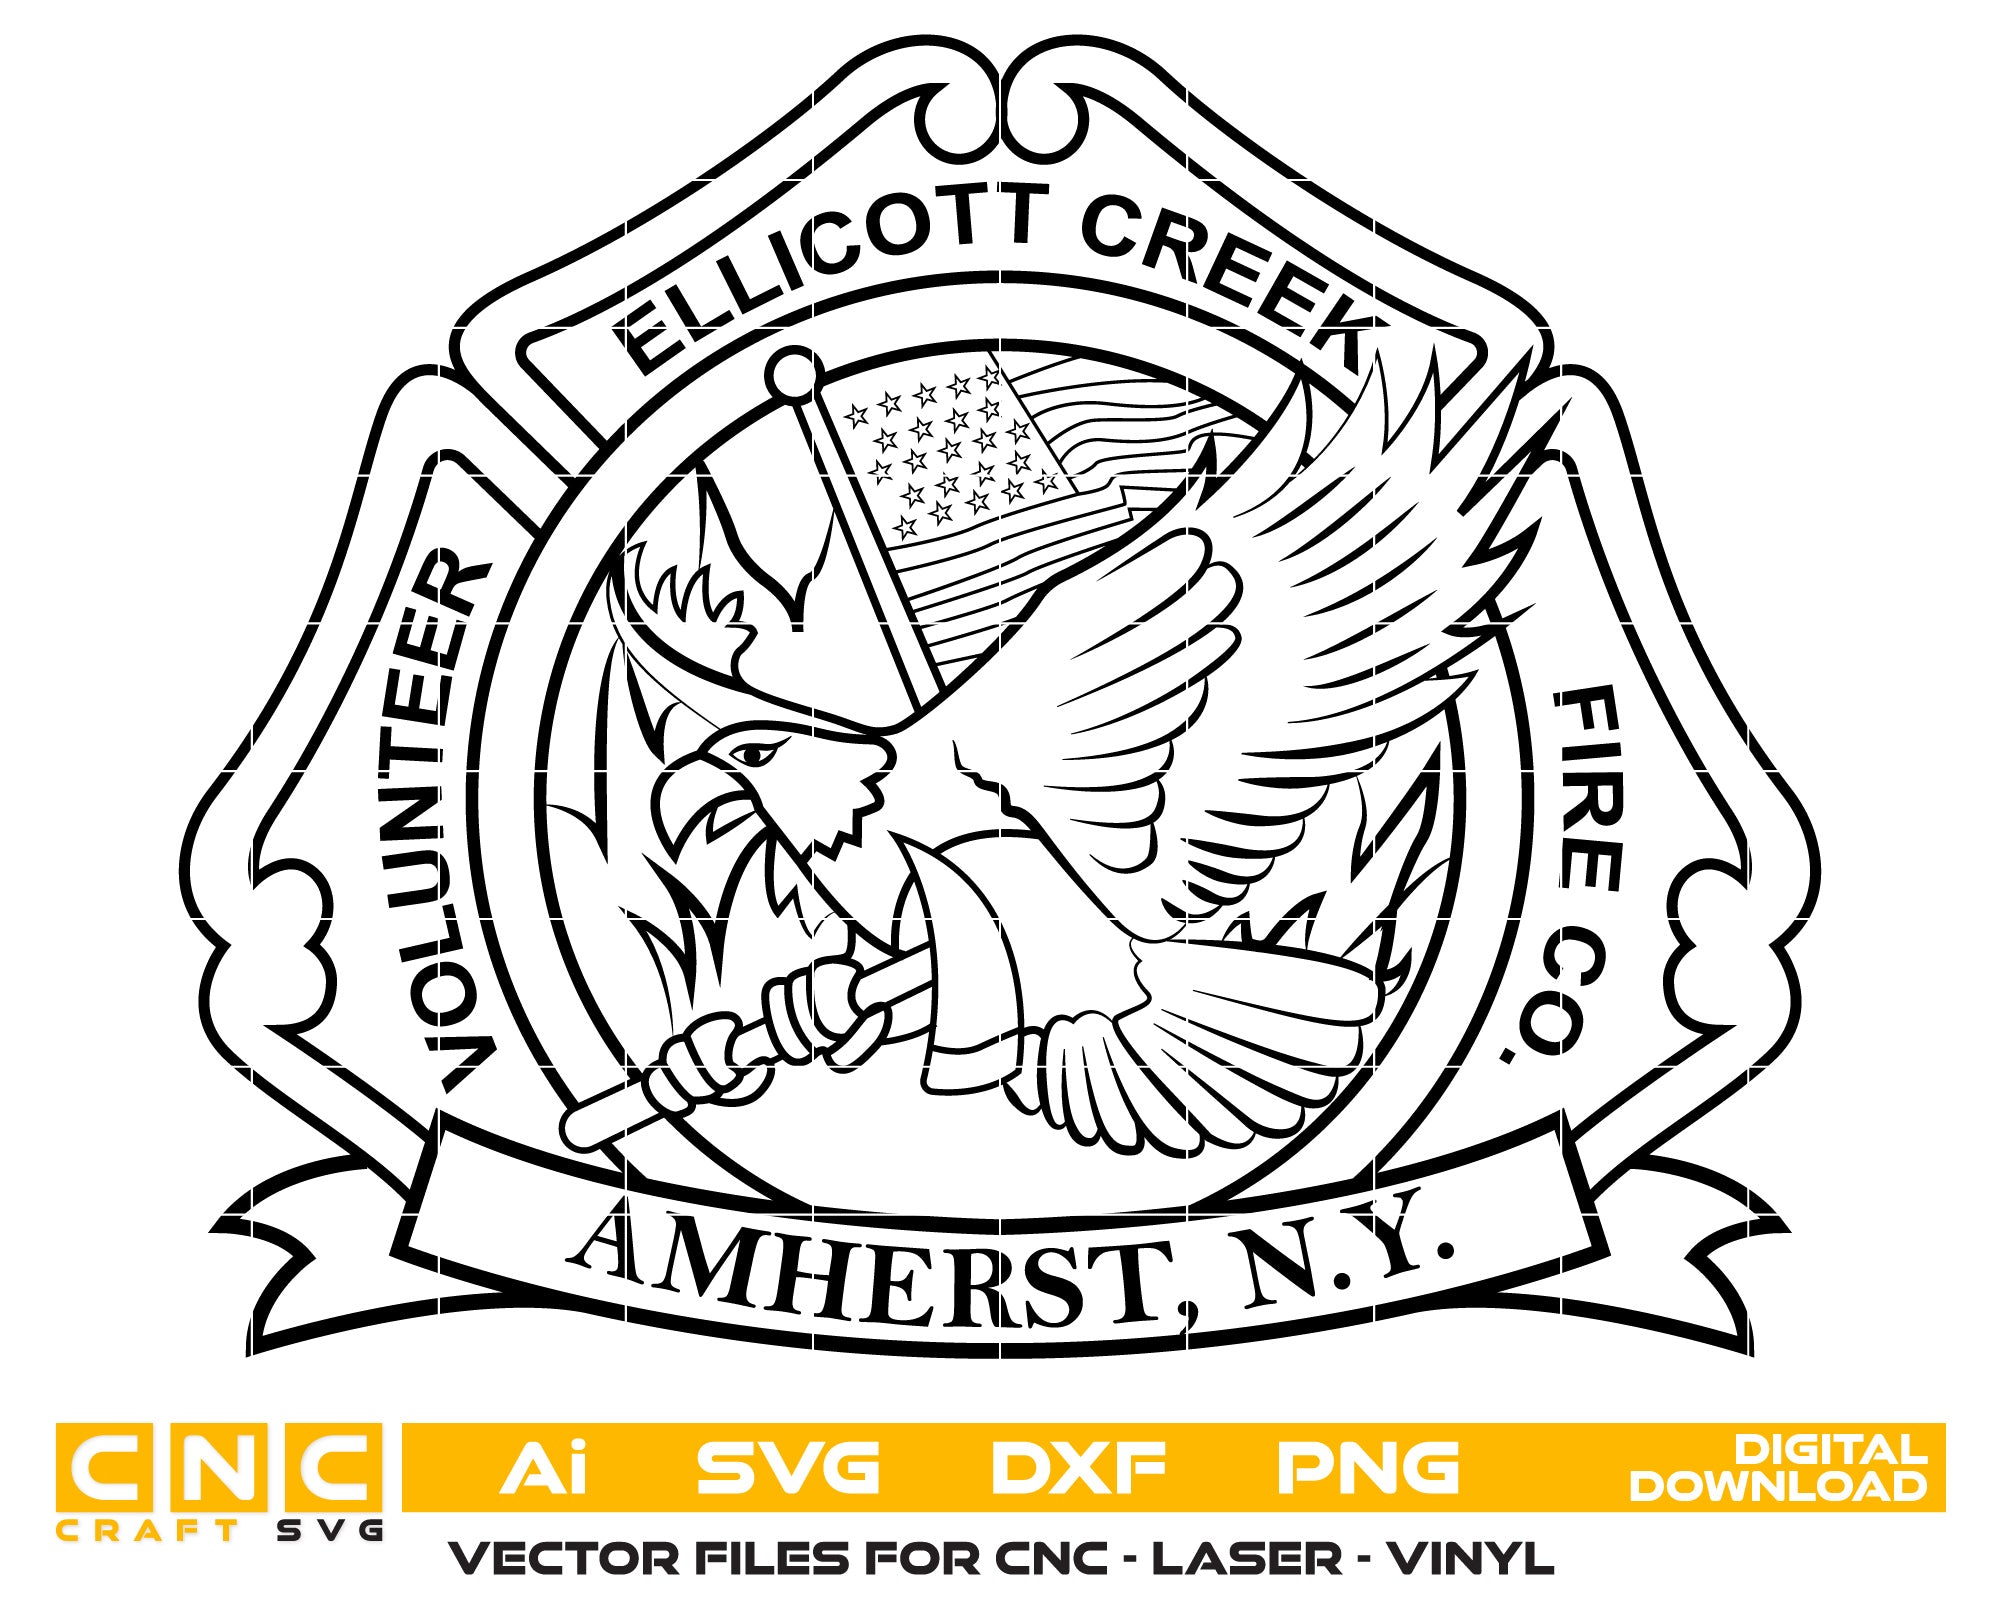 Volunteer Ellicott Creek Fire Co Badge Vector Art, Ai,SVG, DXF, PNG, Digital Files